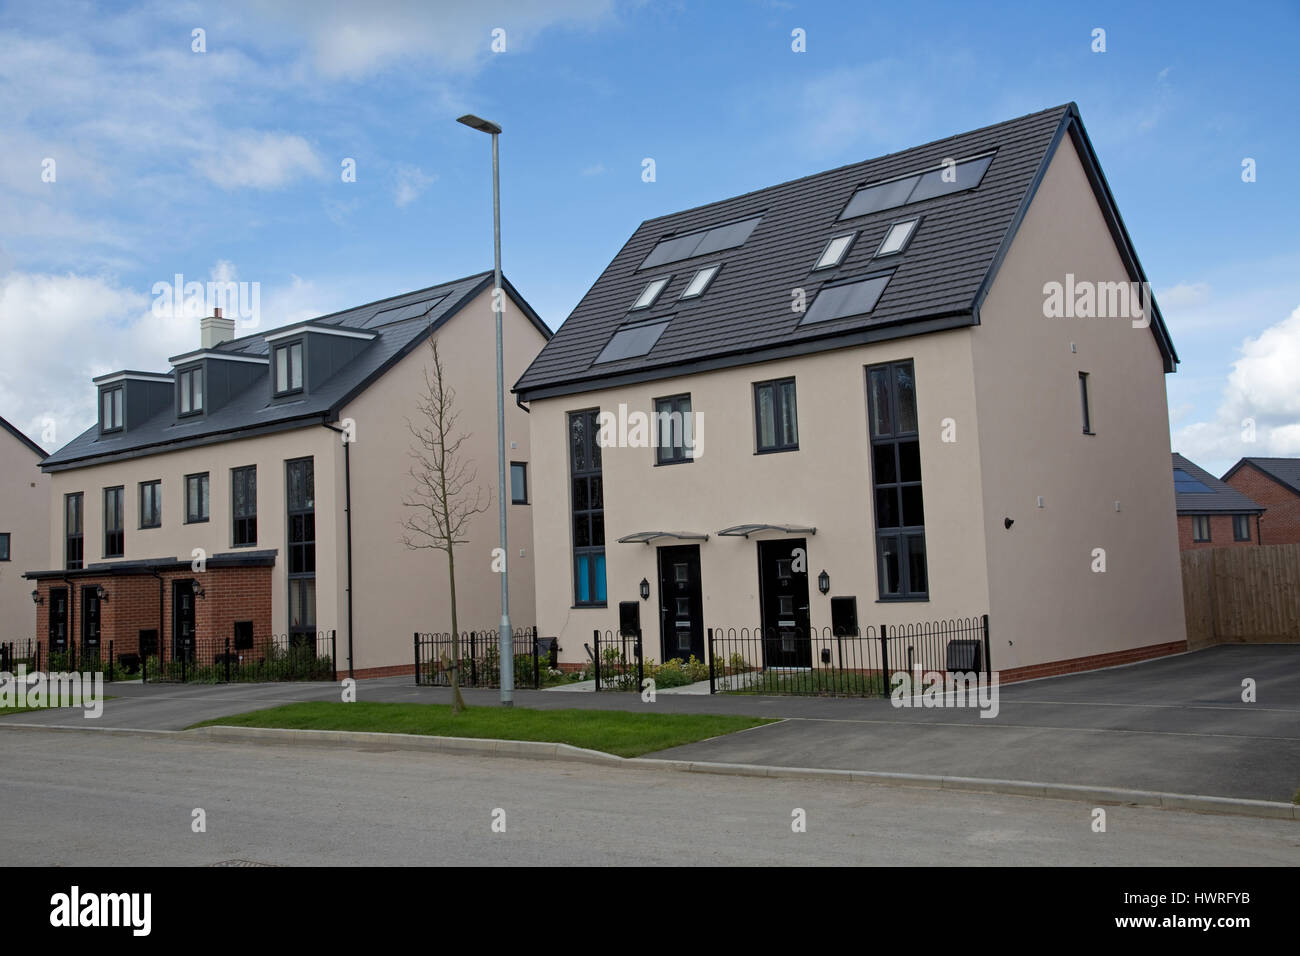 Semi-detached houses 2017 todos con paneles solares fotovoltaicos negro caqui greenacres obispos cleeve cheltenham uk Foto de stock